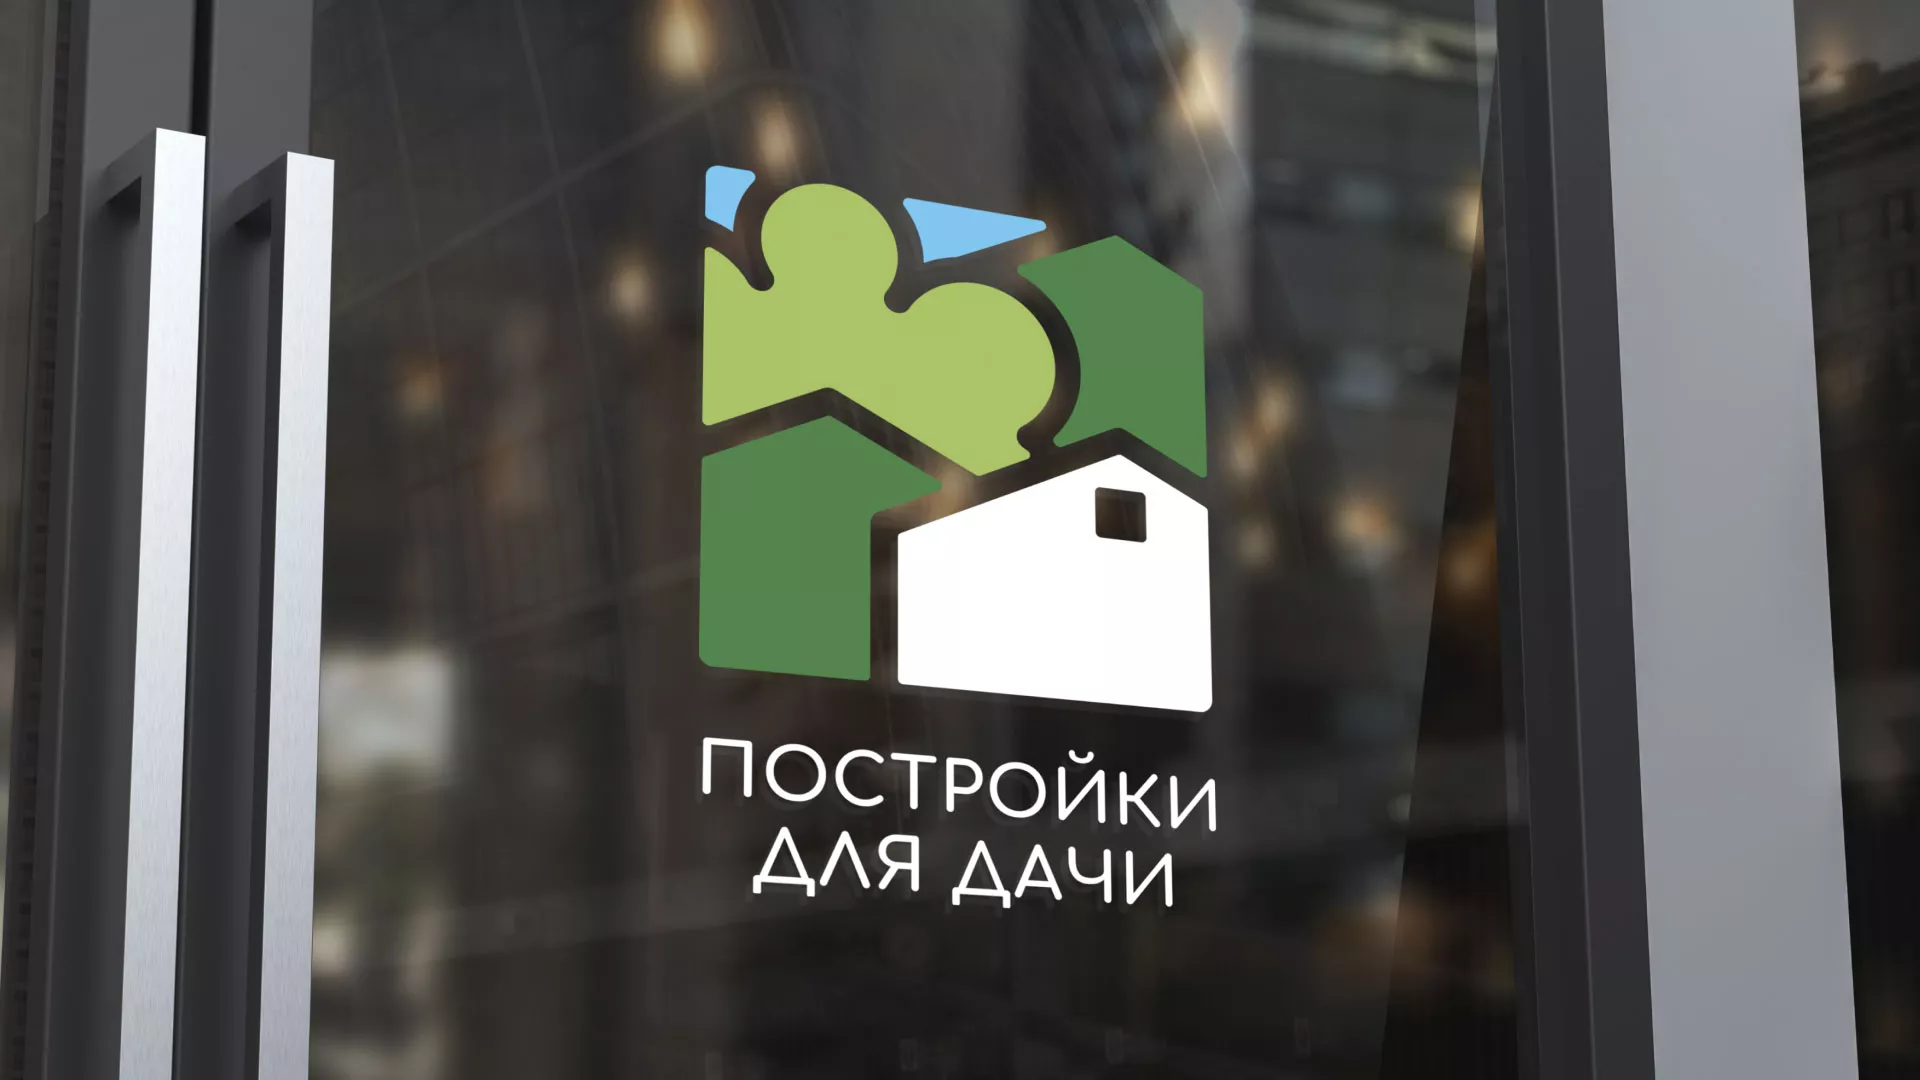 Разработка логотипа в Осе для компании «Постройки для дачи»